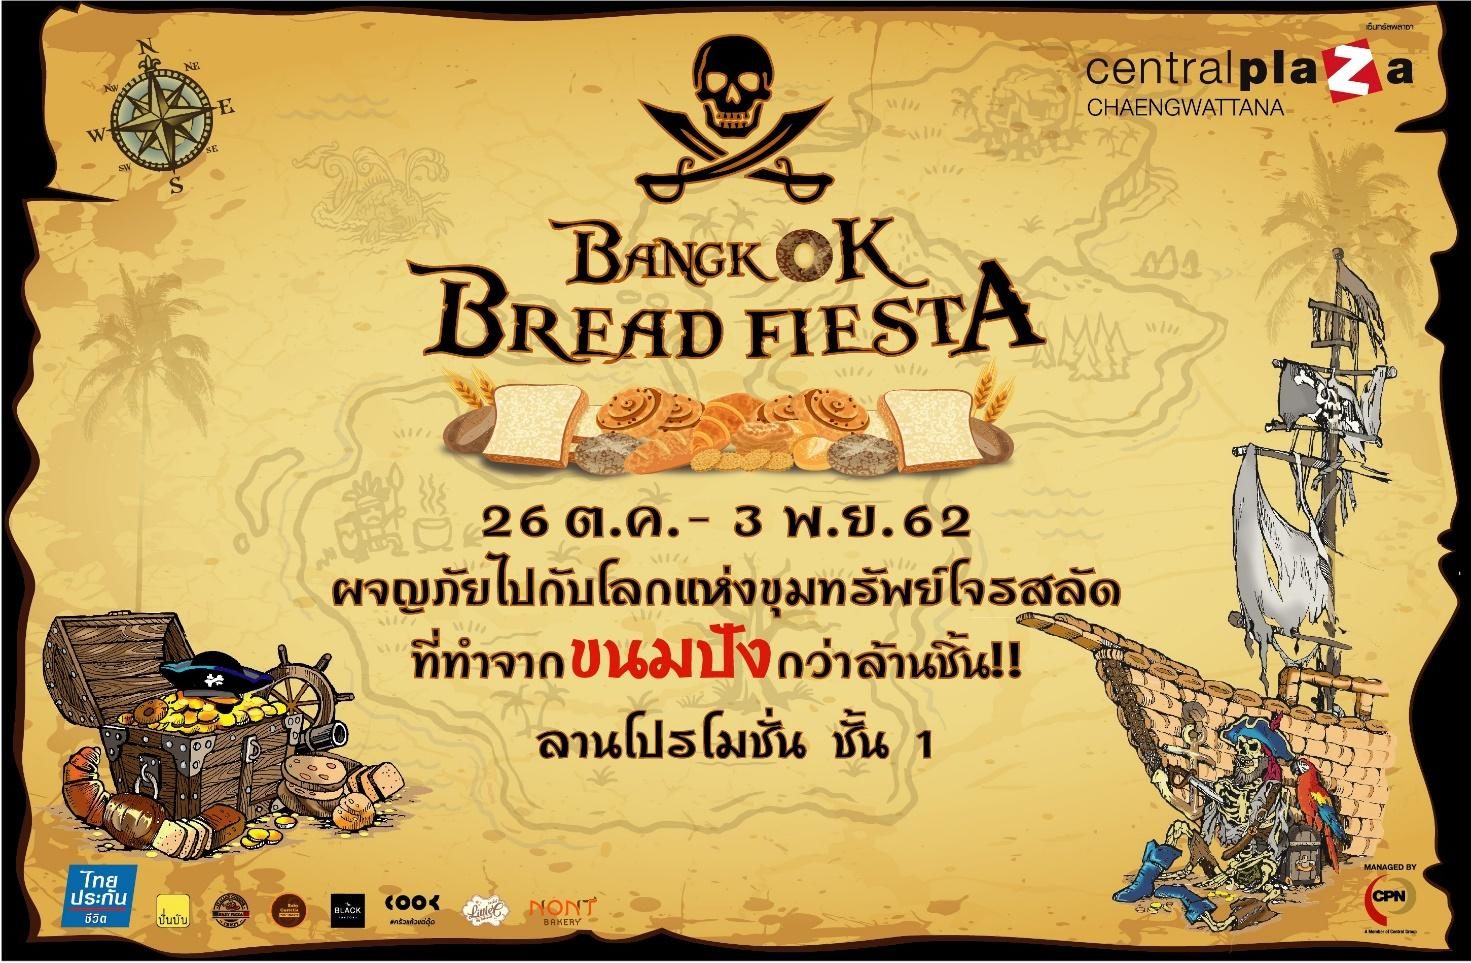 Bangkok Bread Fiesta 2019